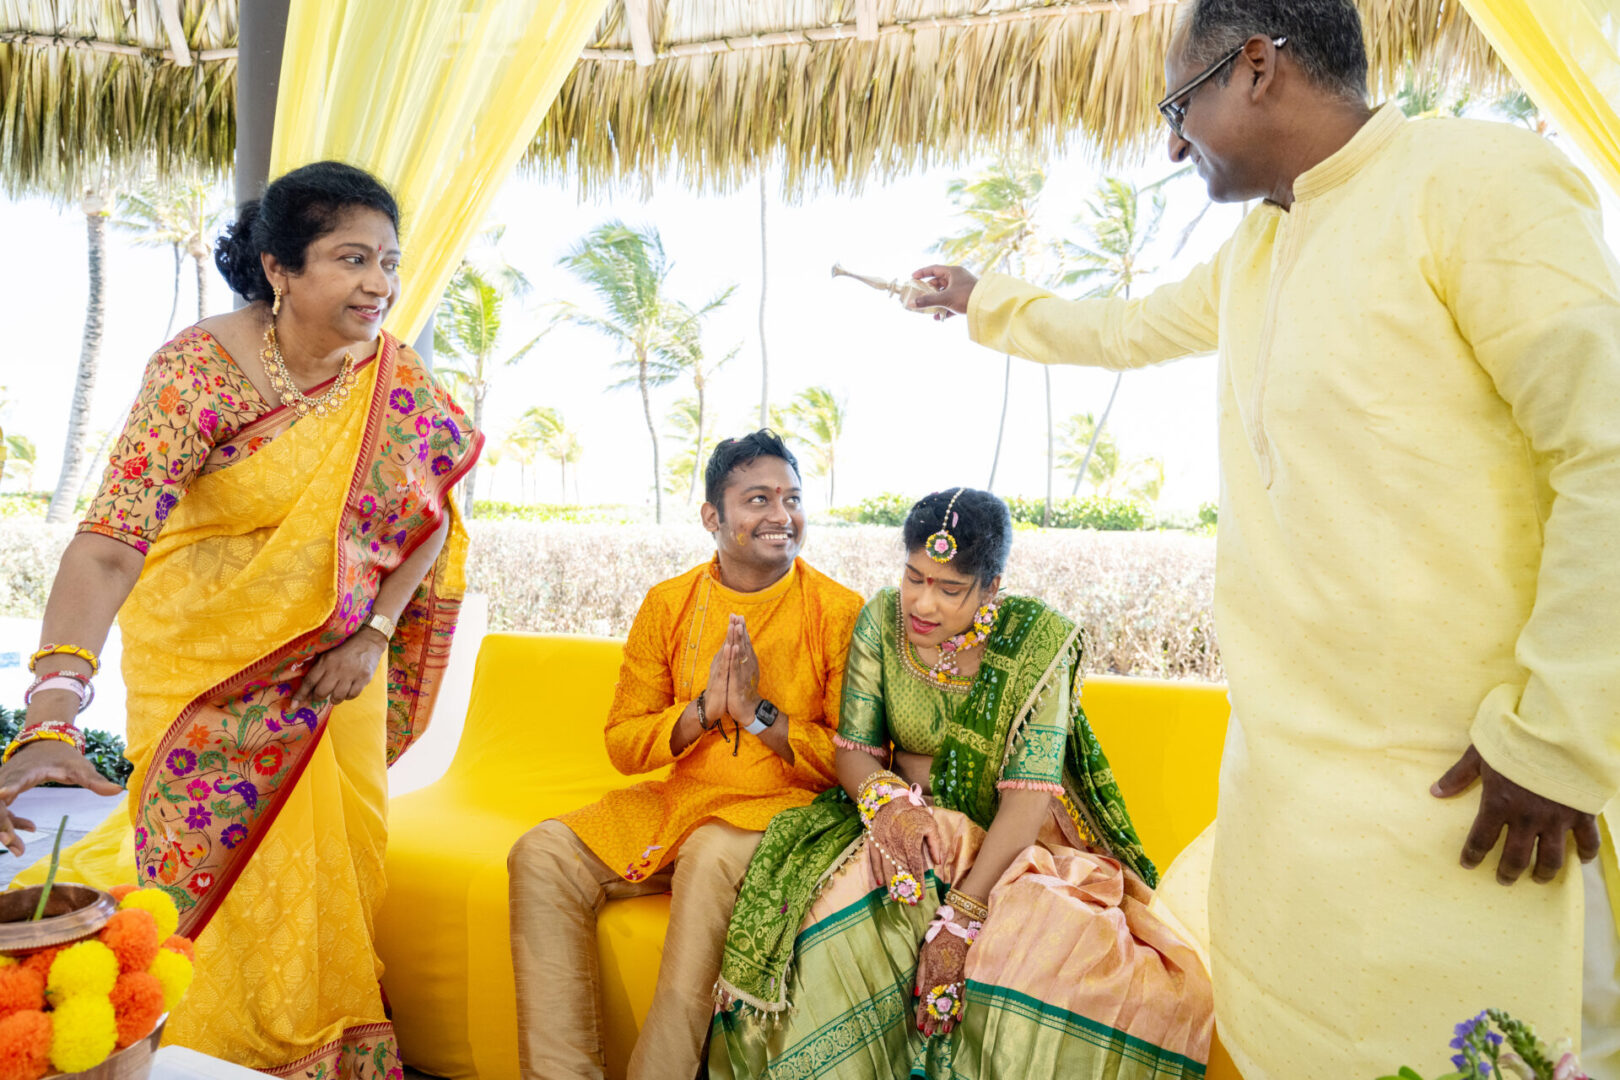 5 Indian wedding in Punta Cana